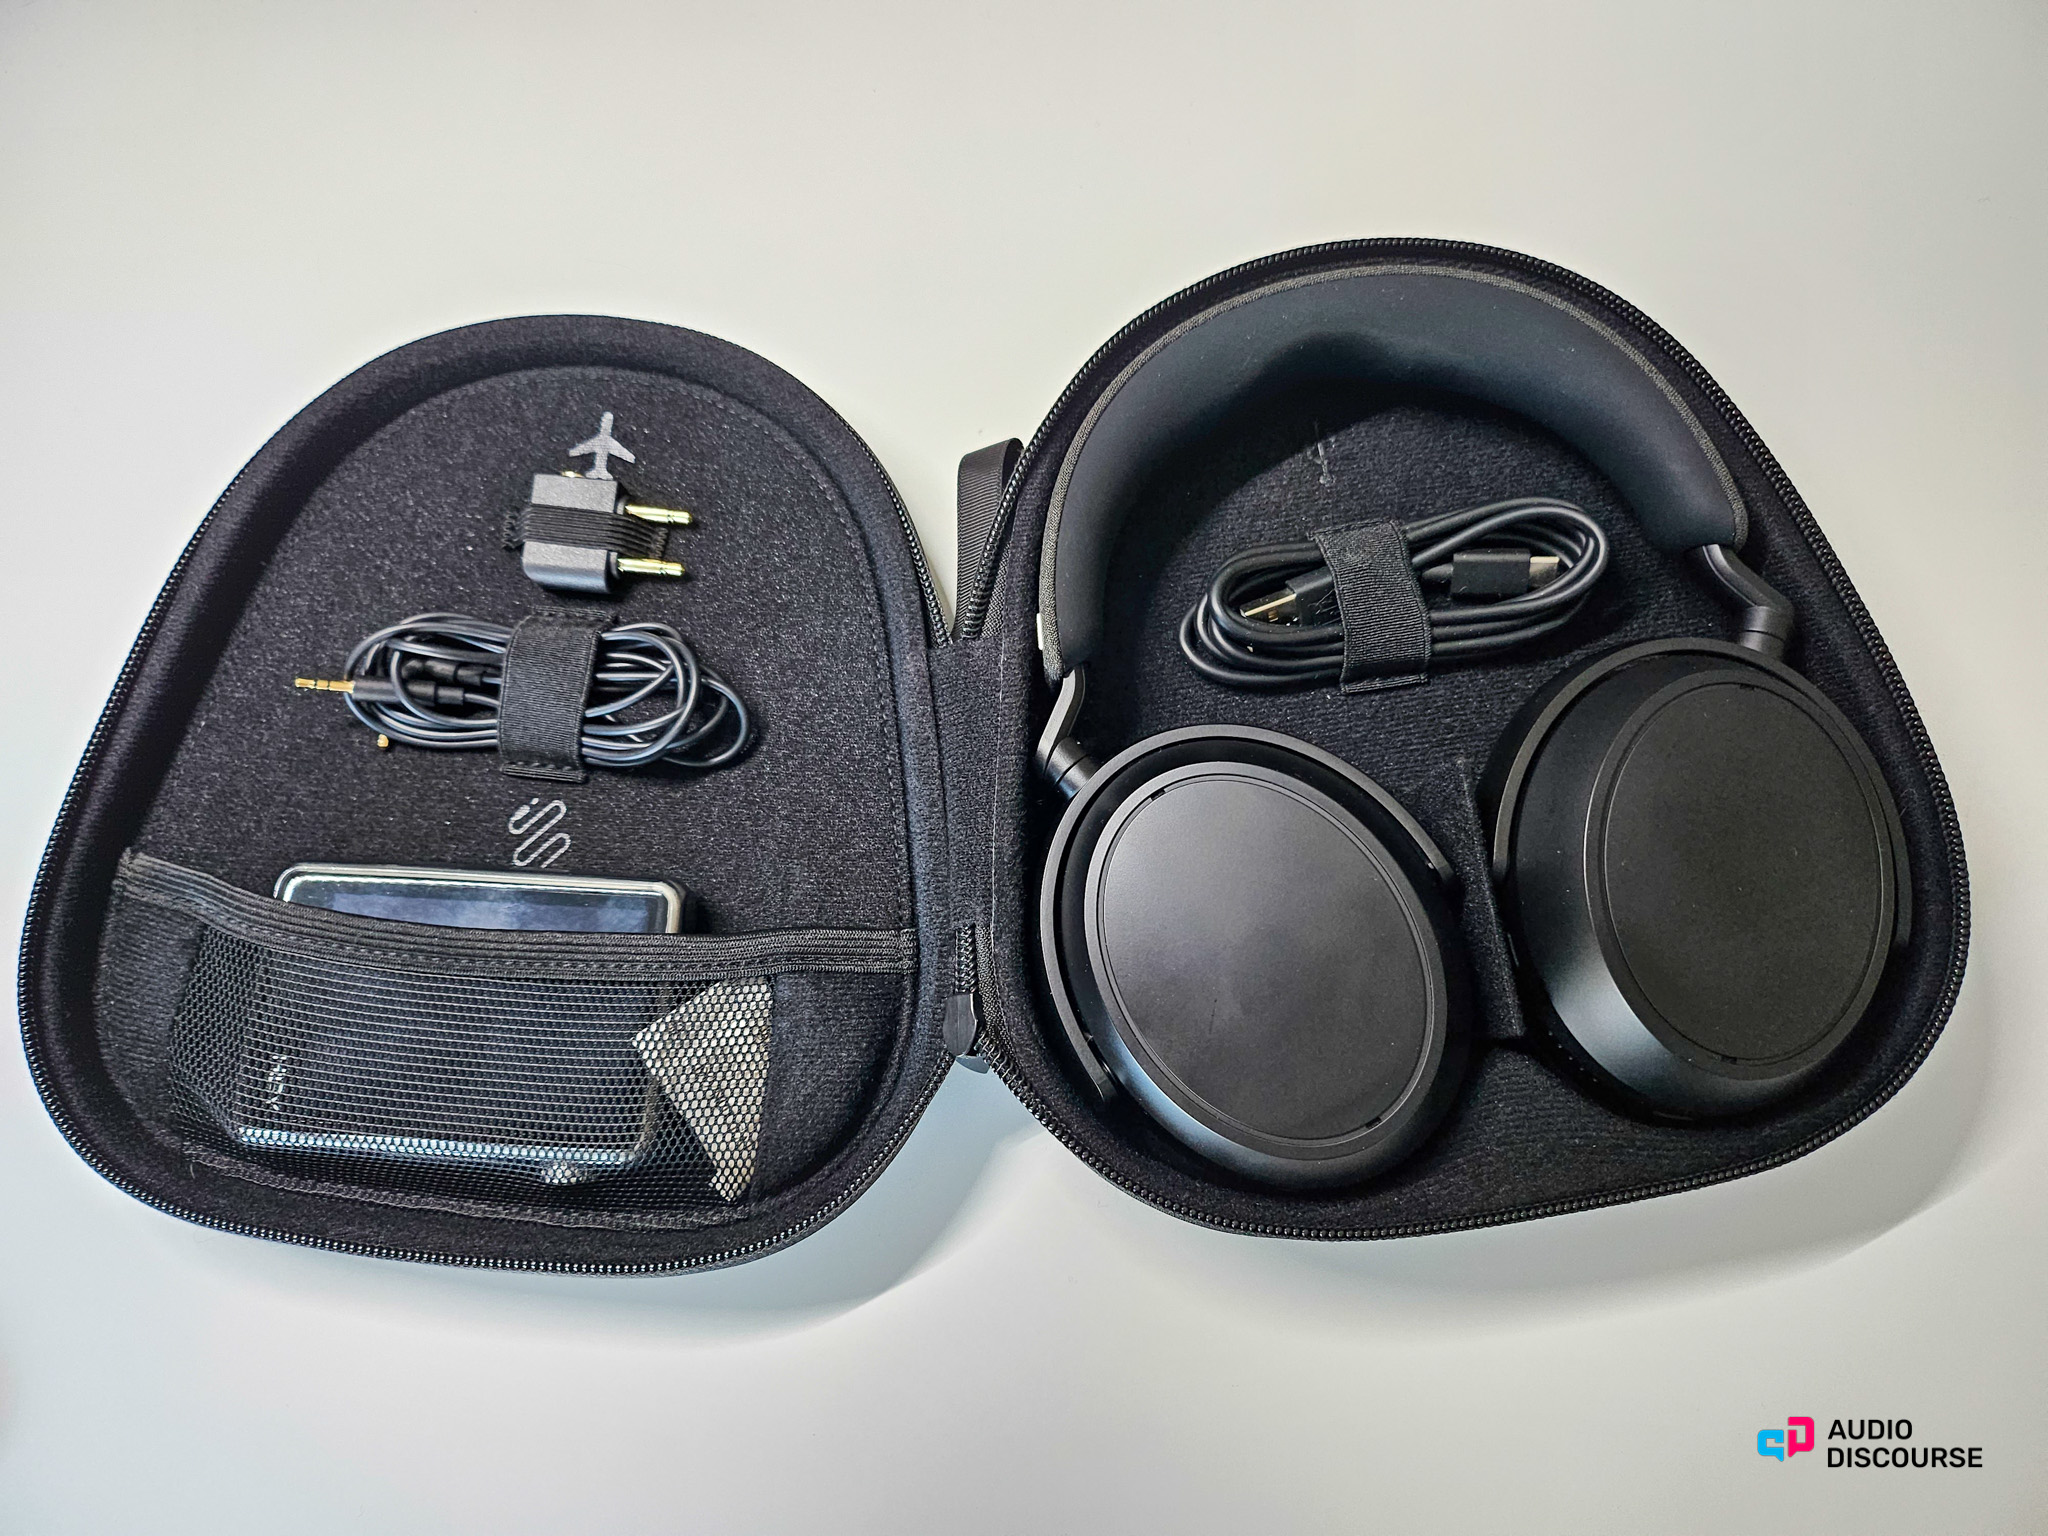 Sennheiser Momentum 4 Wireless headphones review: strong